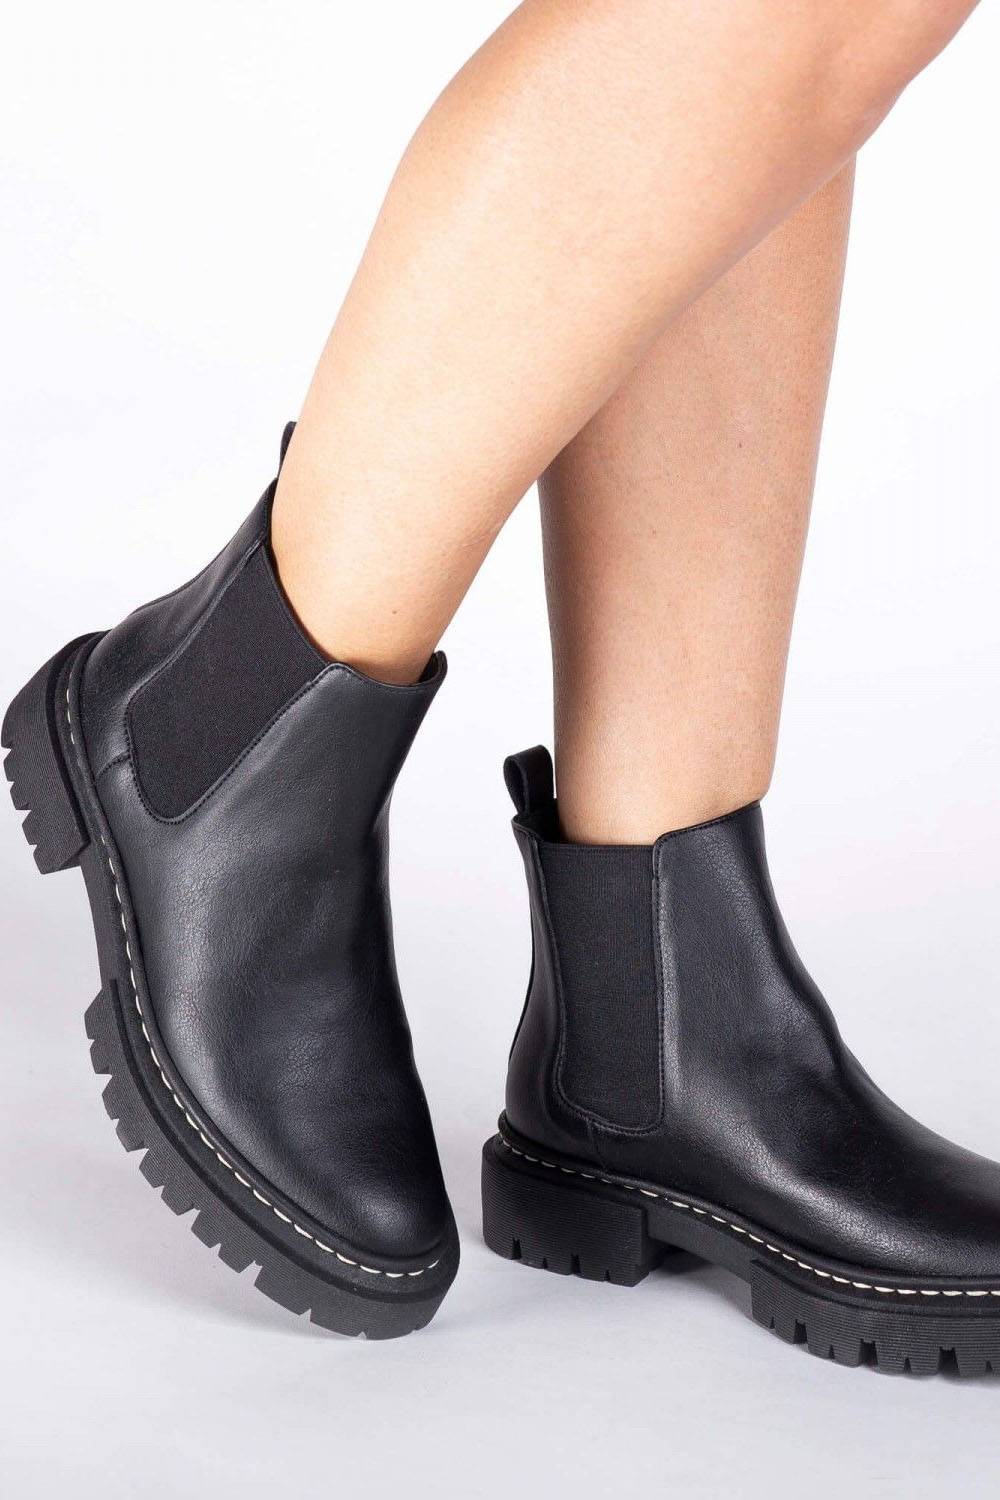 nae vegan leather rain boots